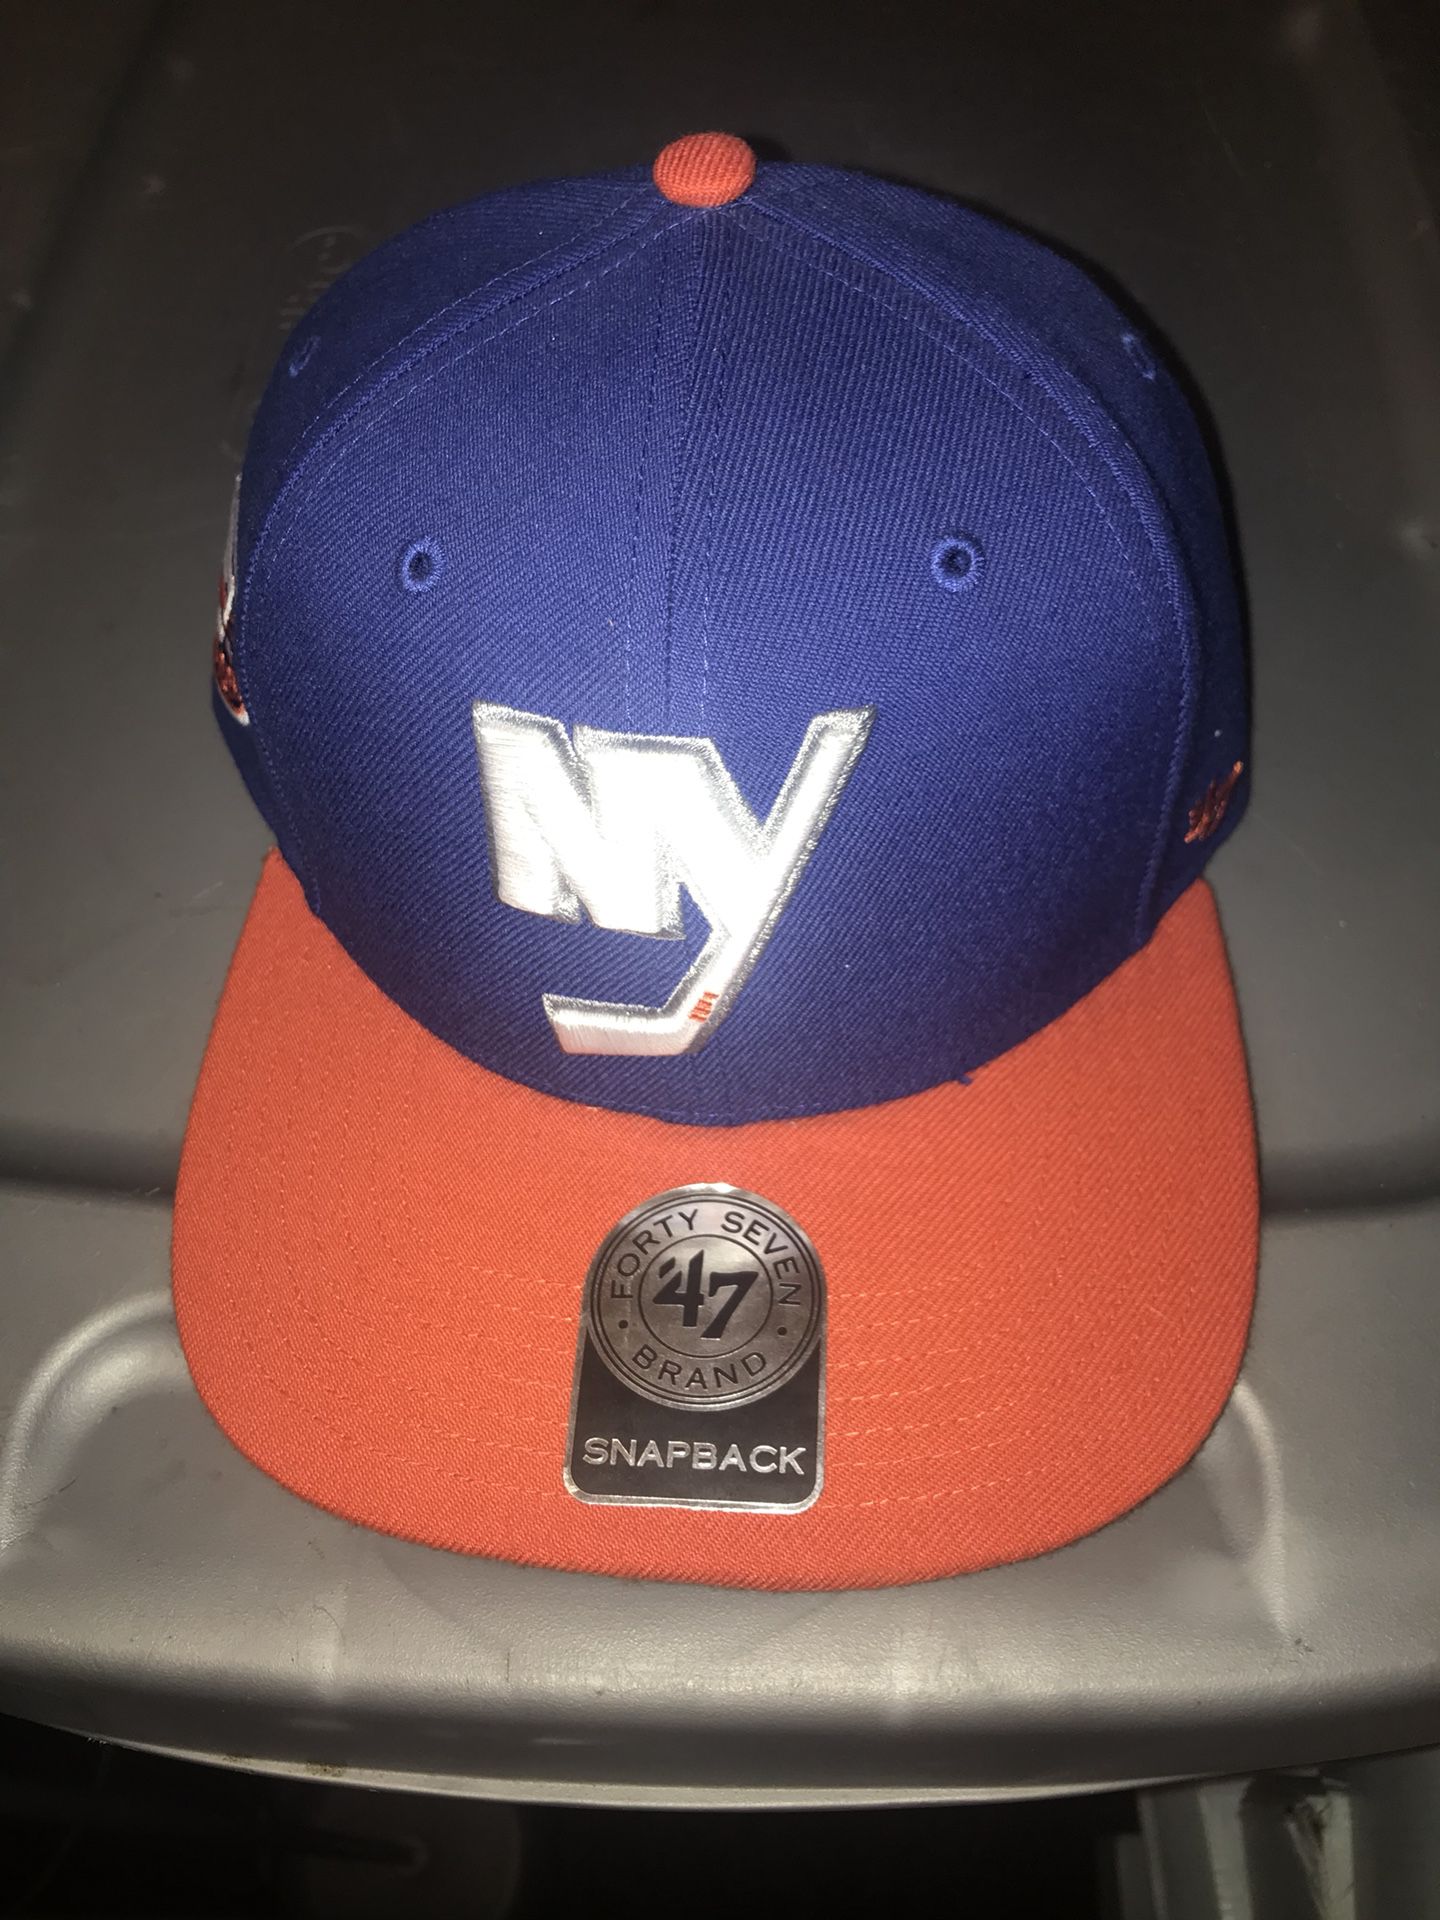 New York islanders snap back 47 hat NWT